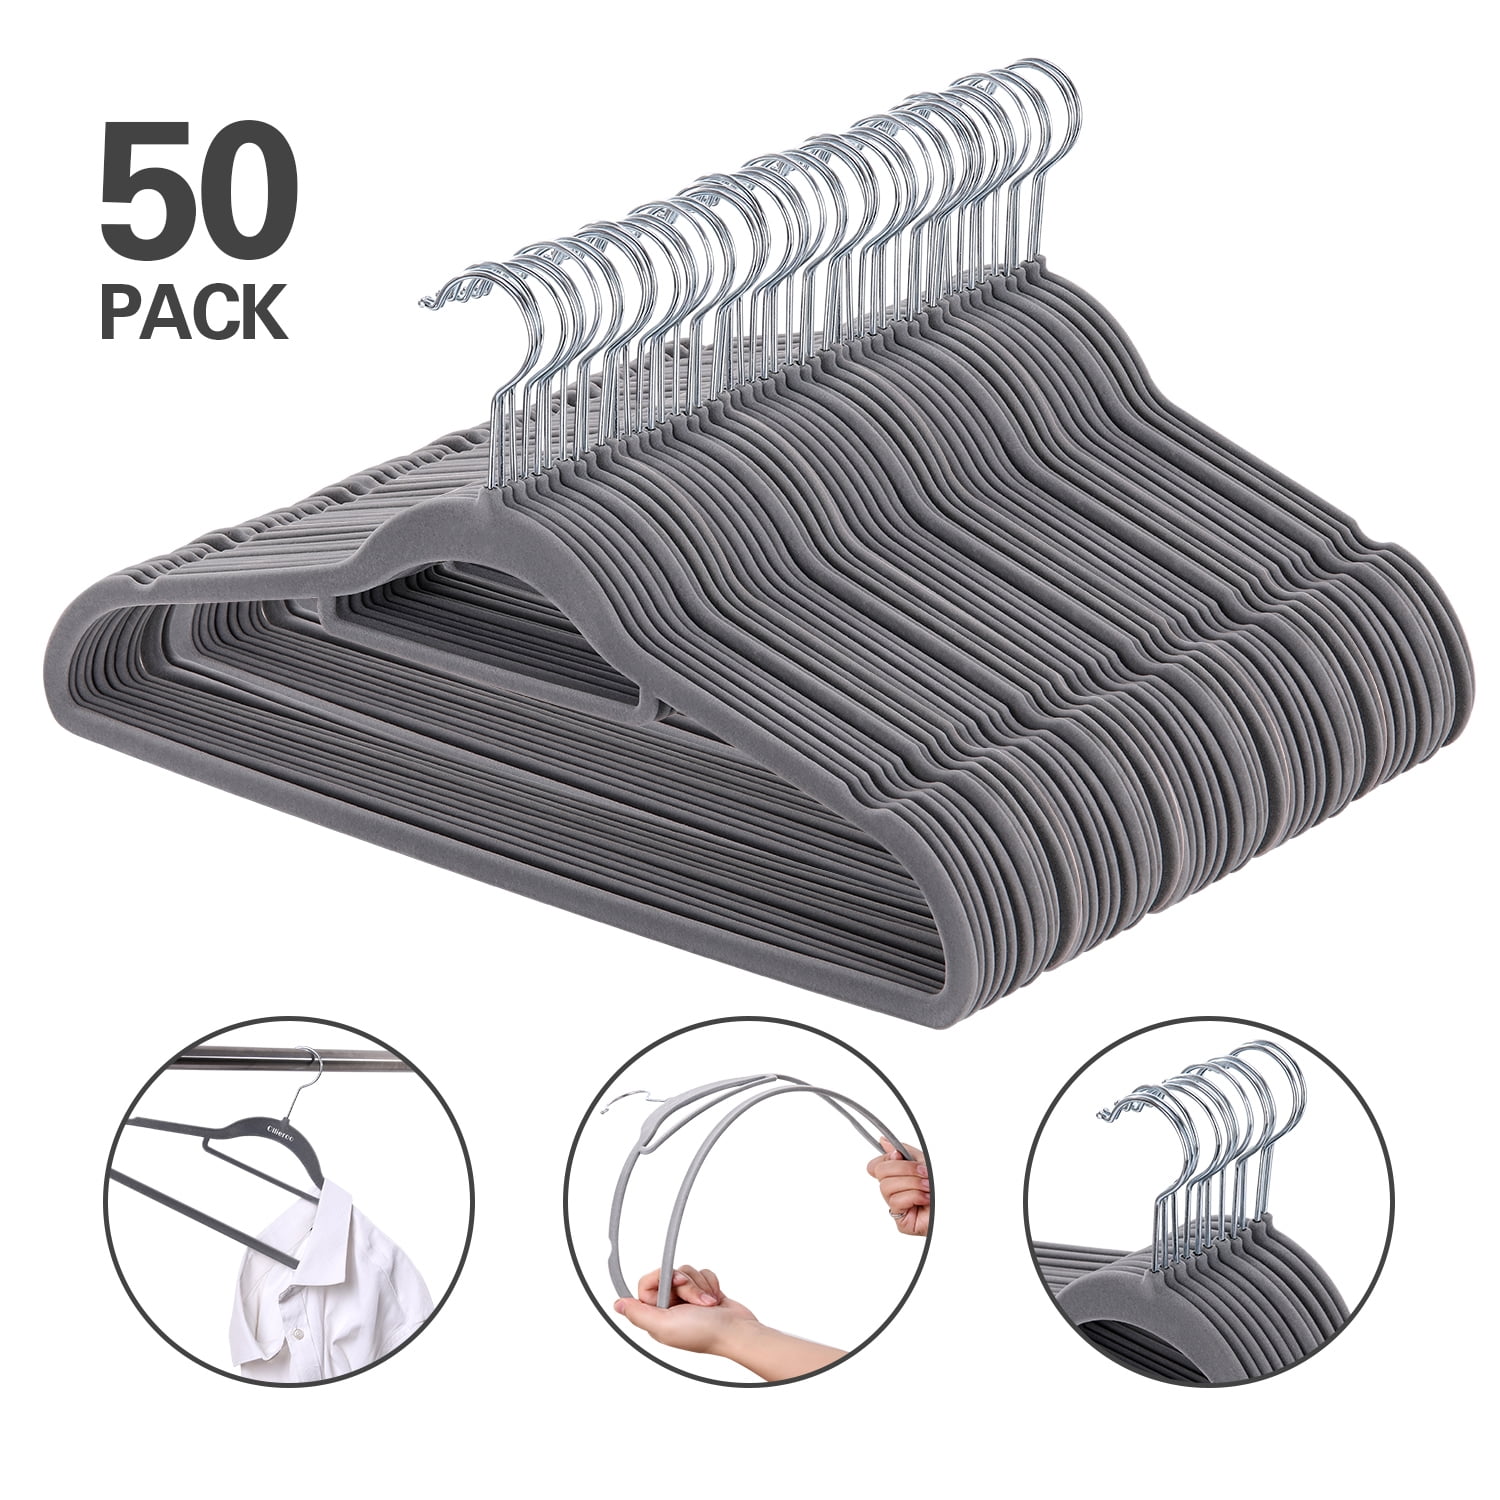 ThermalinX Premium Velvet Hangers 50 Pack - Non-Slip, Durable